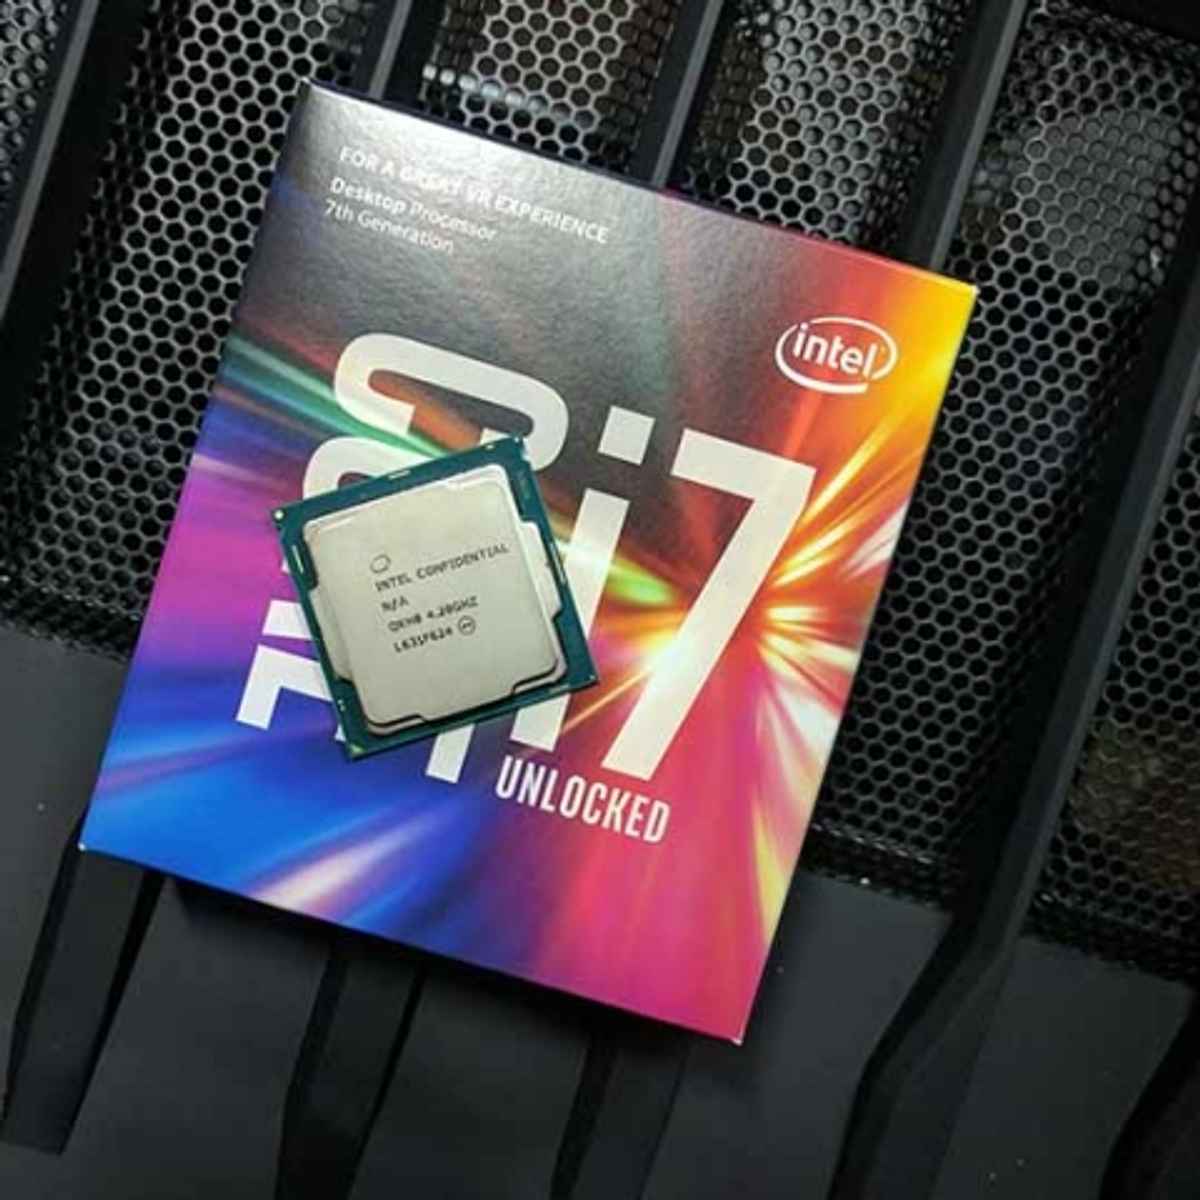 Intel Core I7 7700k Review